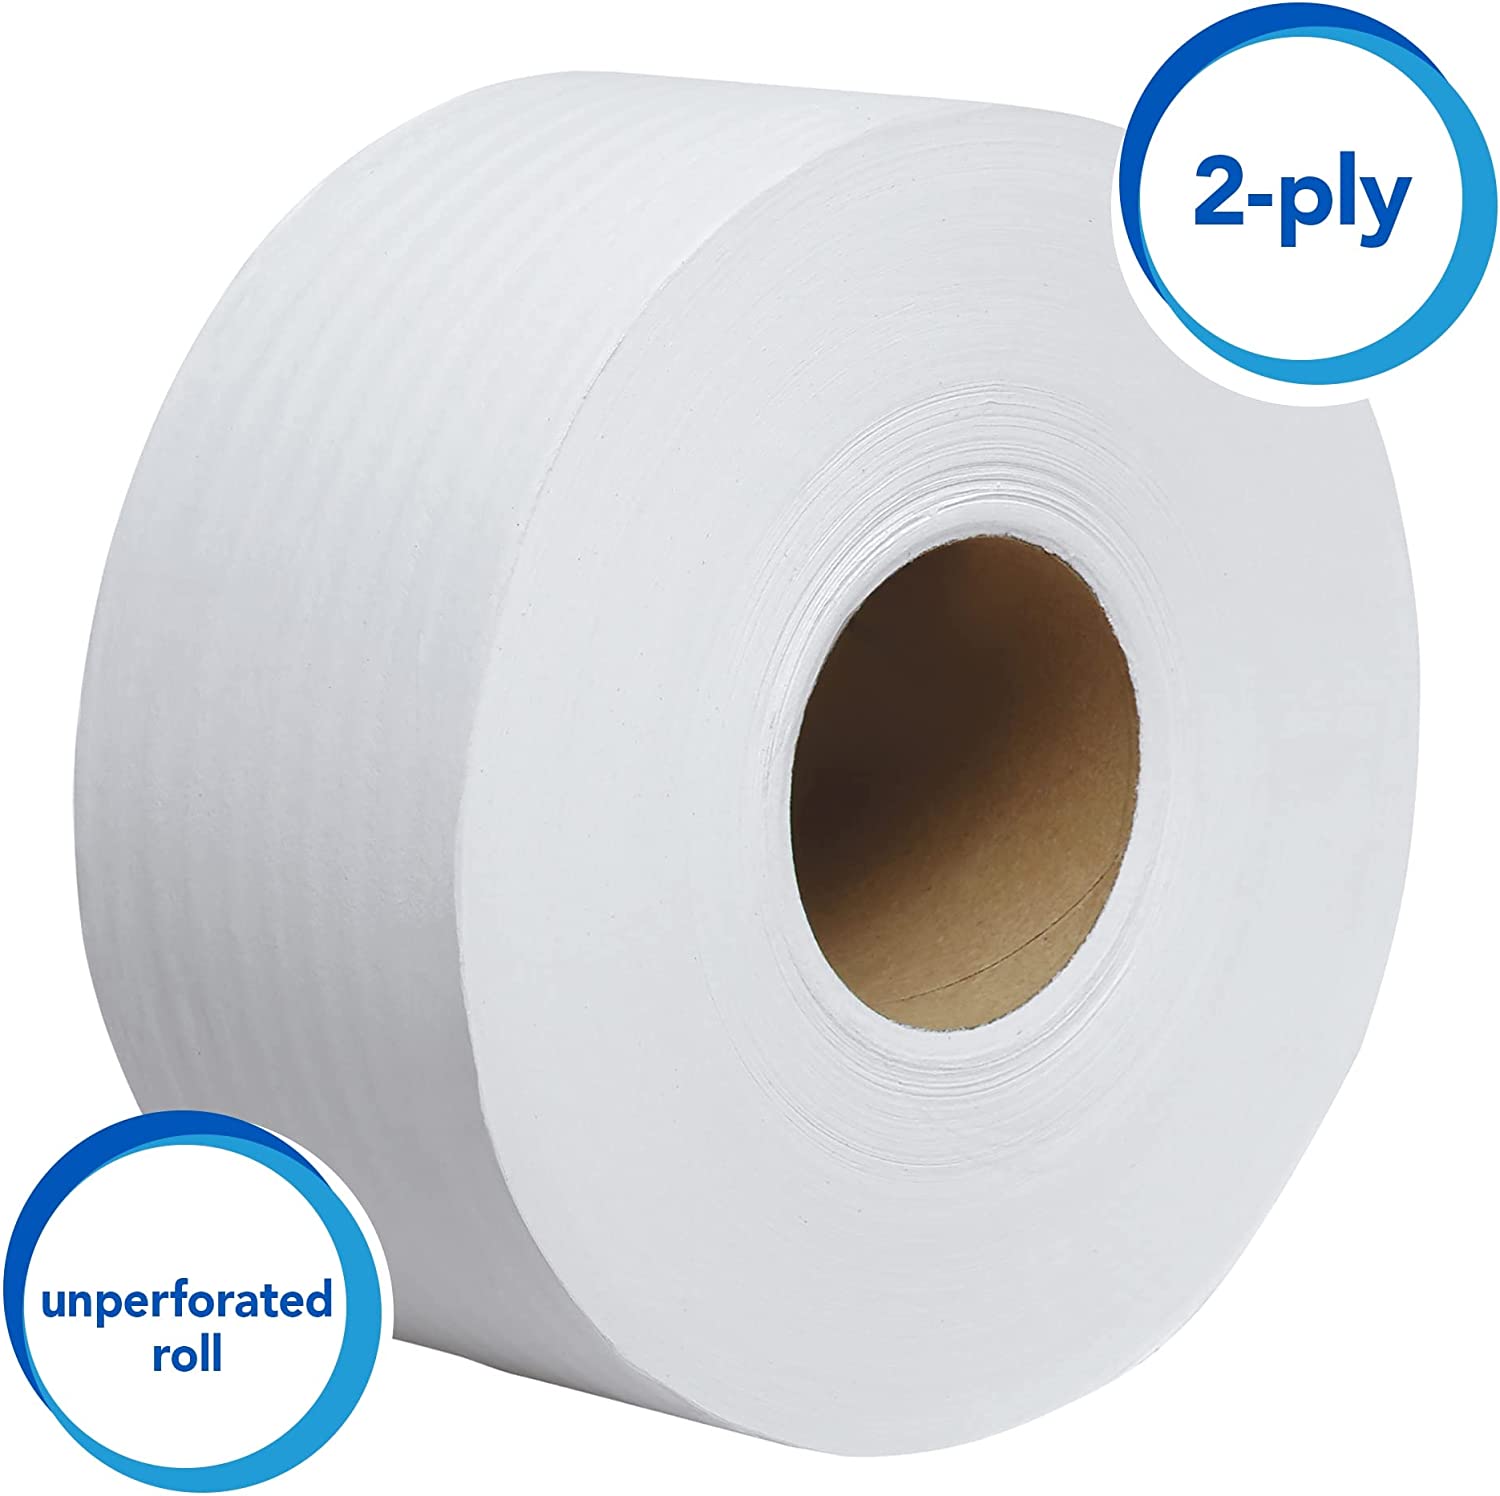 Jumbo Roll Tissue Premium Quality (2 ply) 24cm diameter x 9cm wide ...